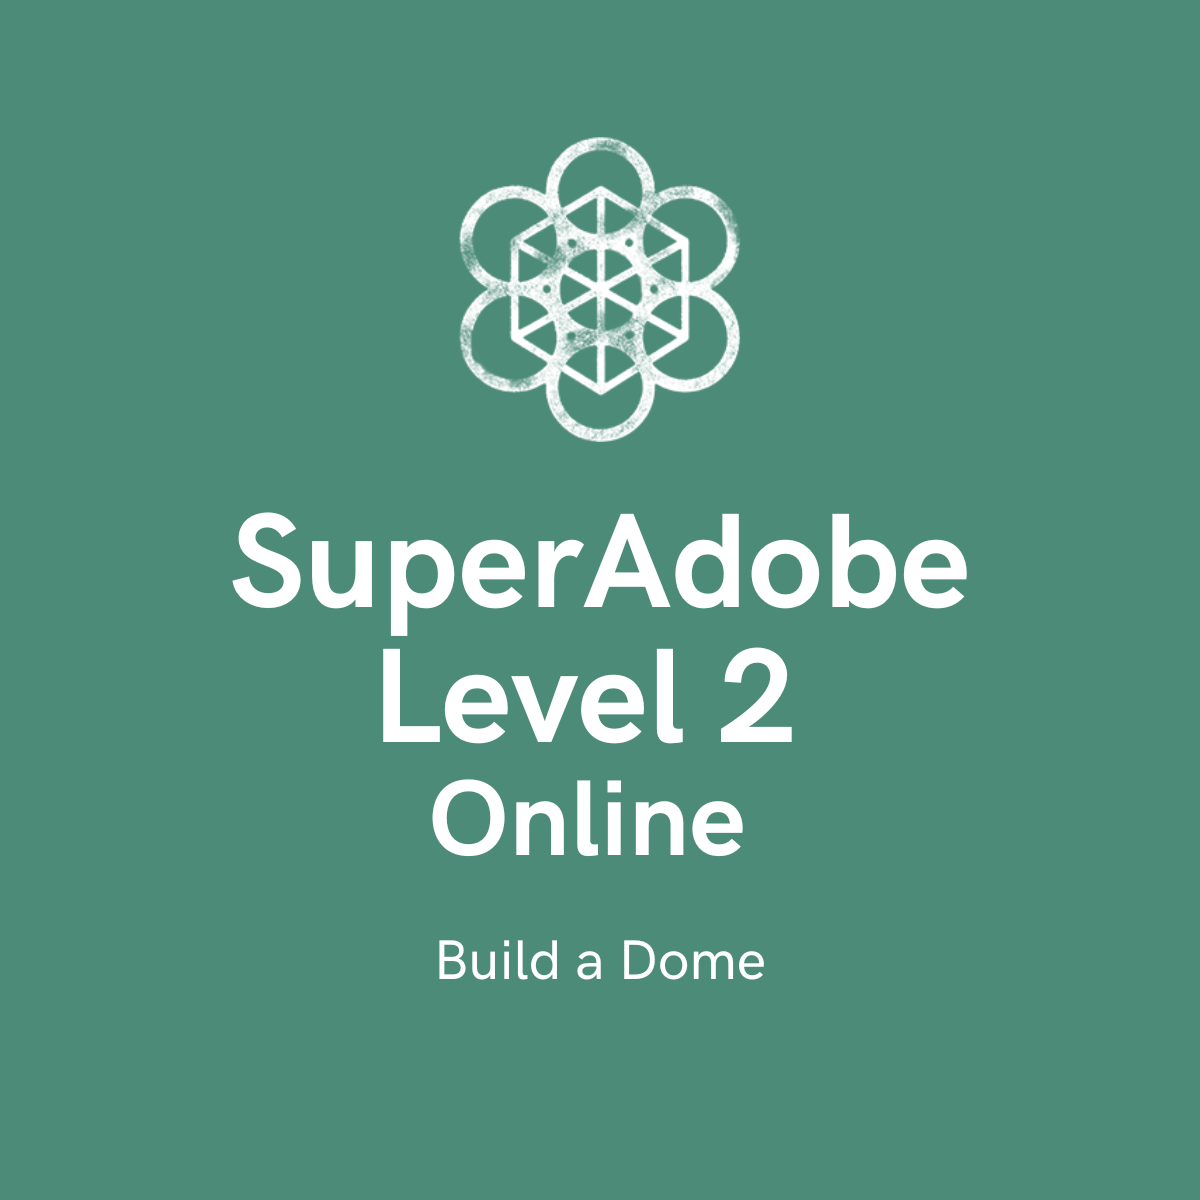 SuperAdobe Level 2 Online: Build A Dome